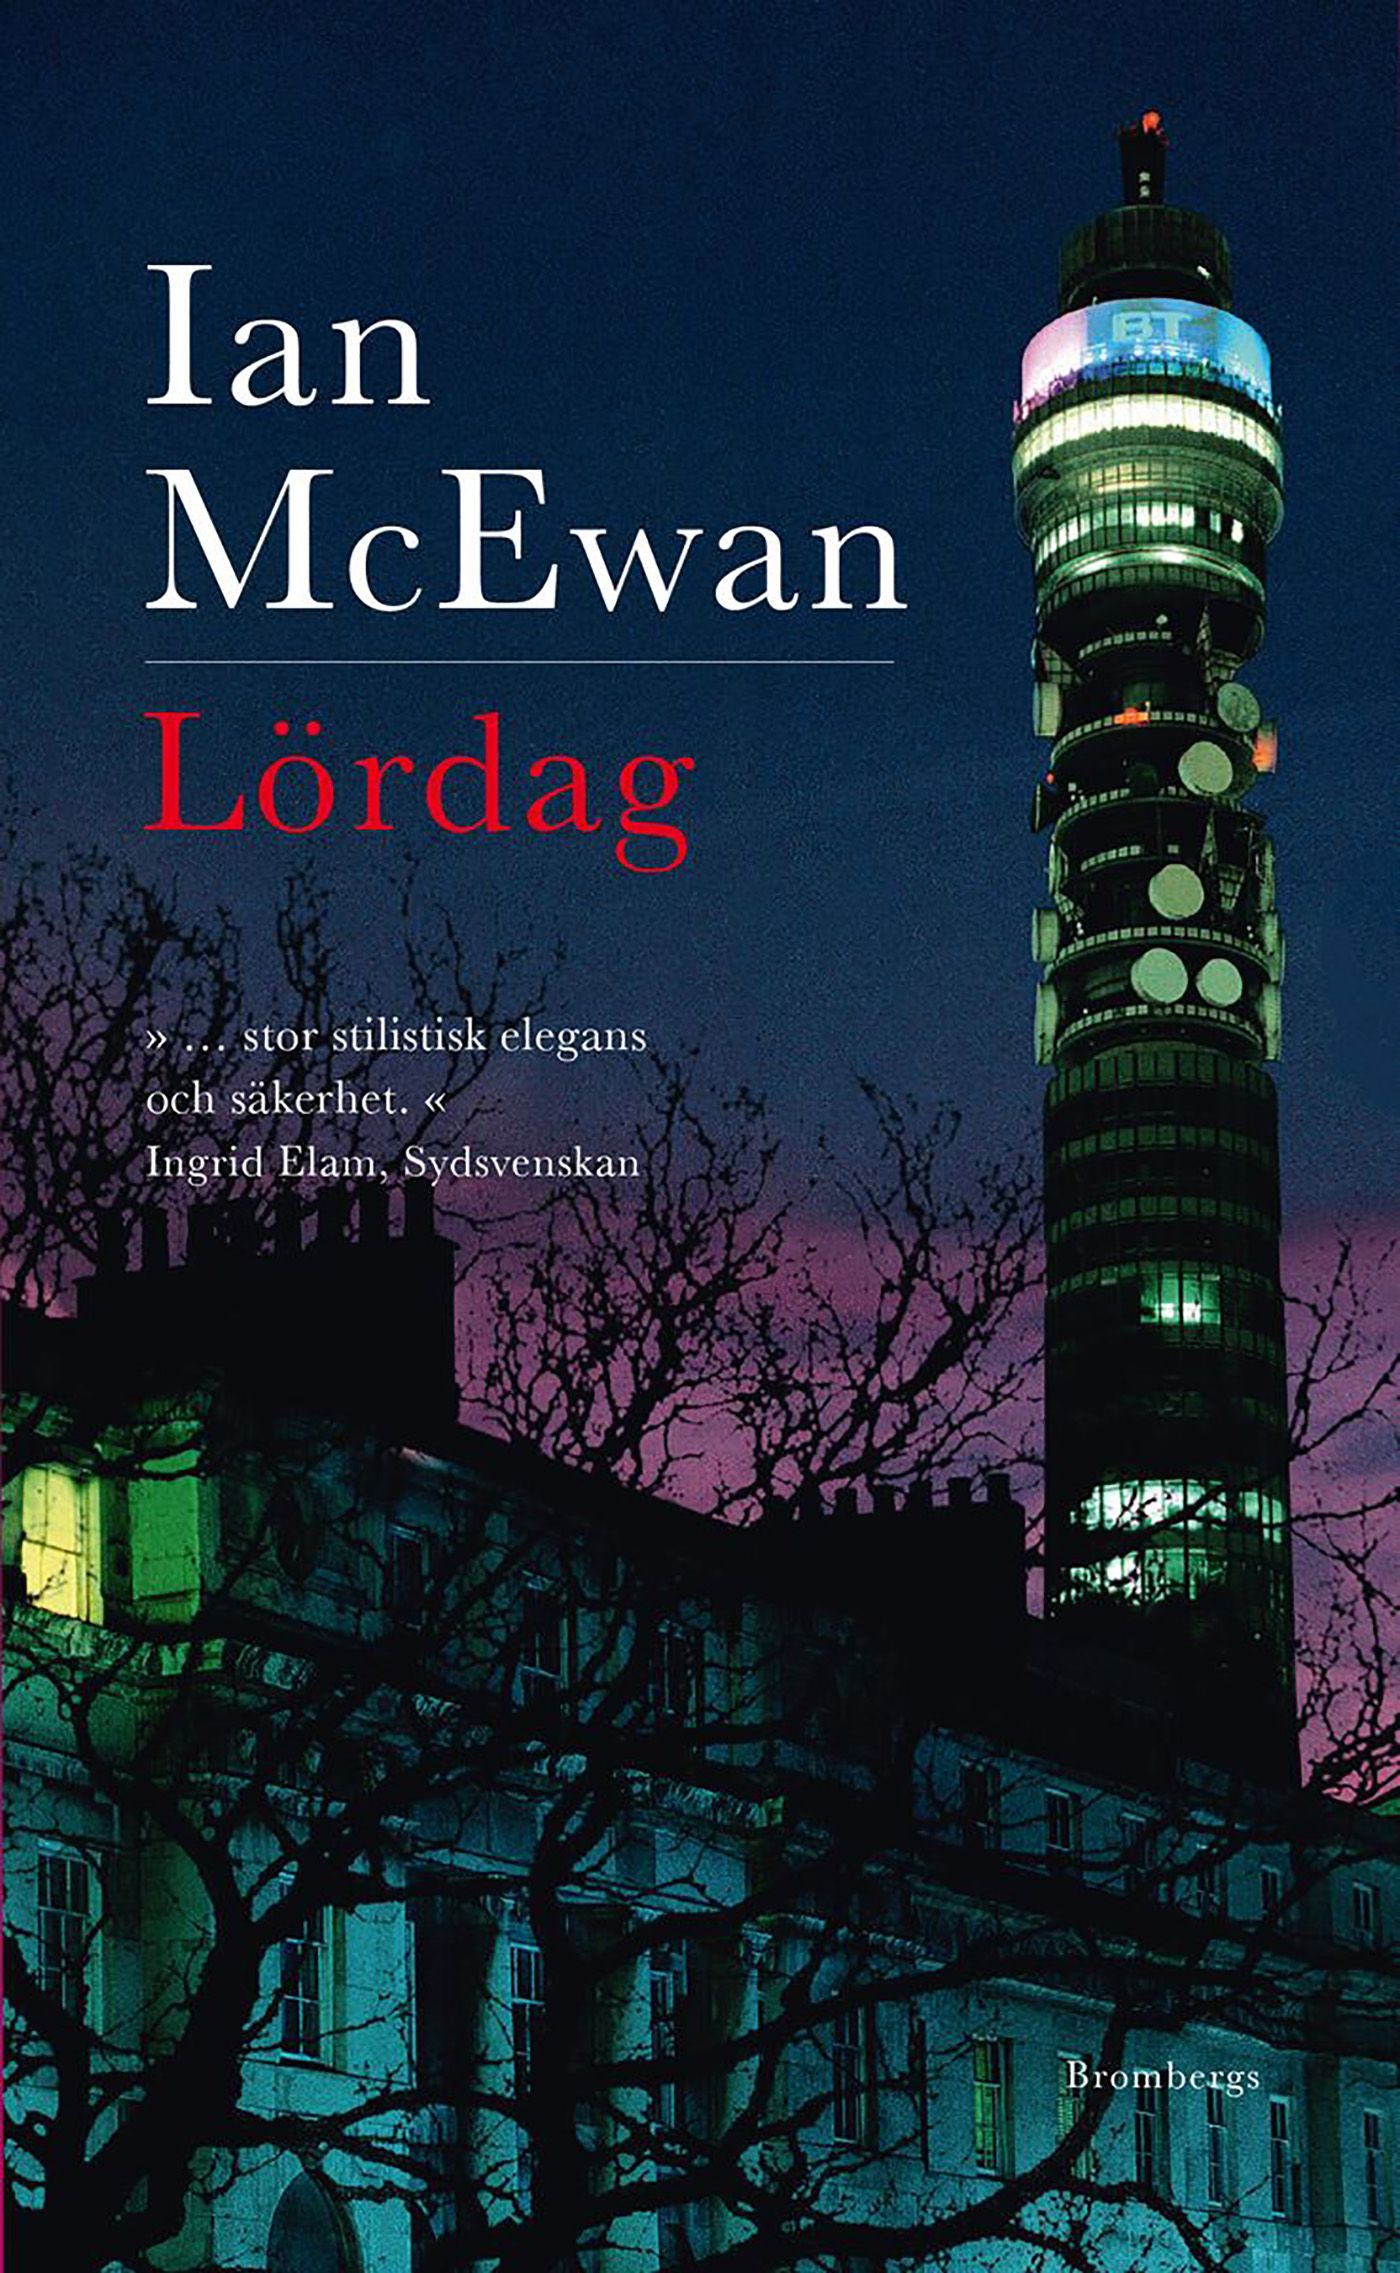 Lördag, audiobook by Ian McEwan